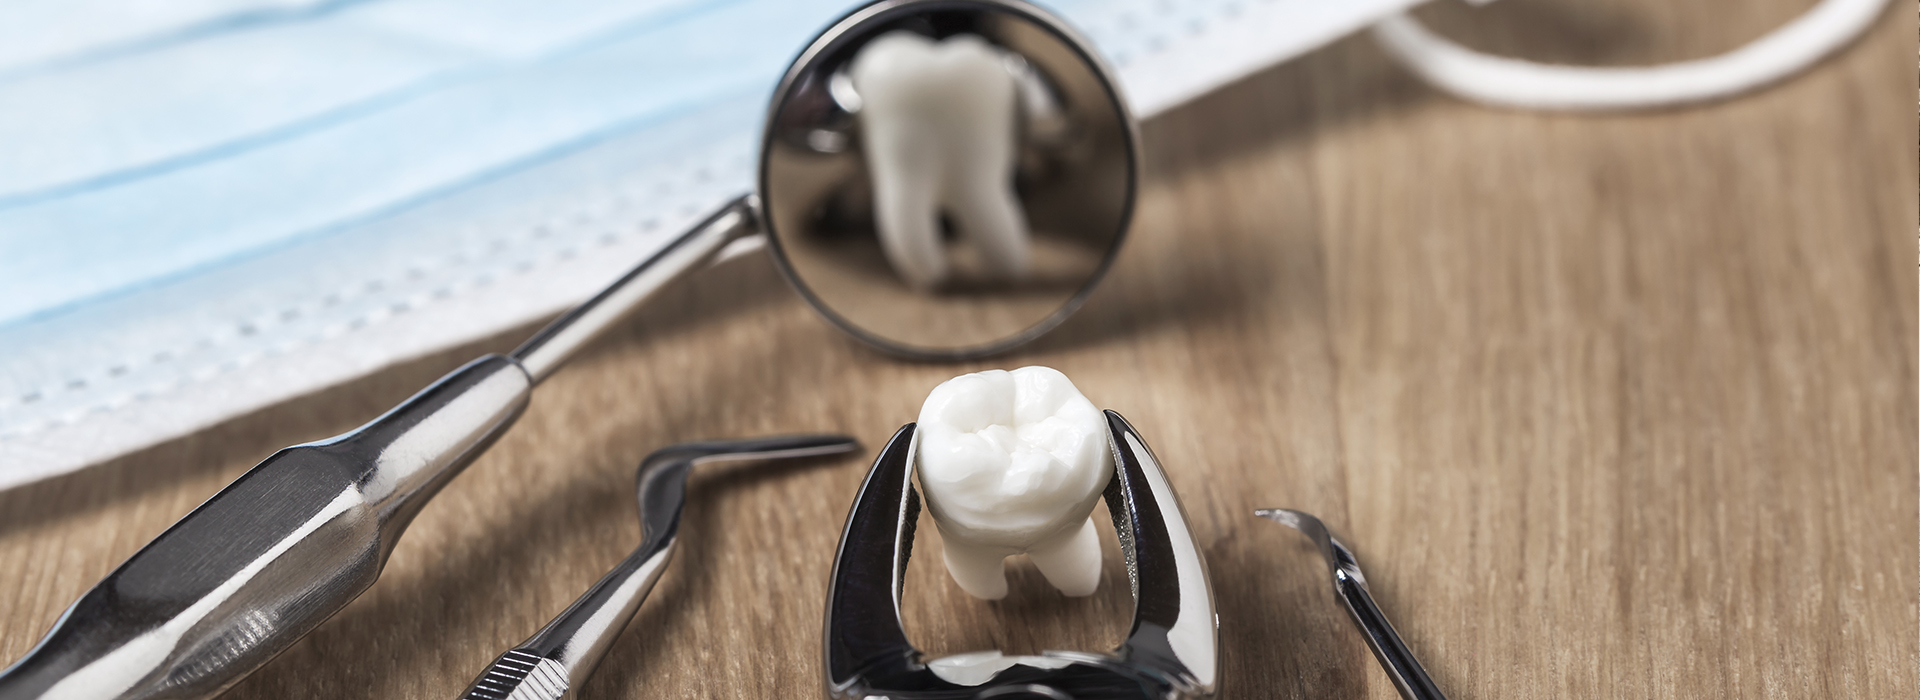 Steger Smiles Family Dentistry | Ceramic Crowns, Implant Dentistry and Invisalign reg 